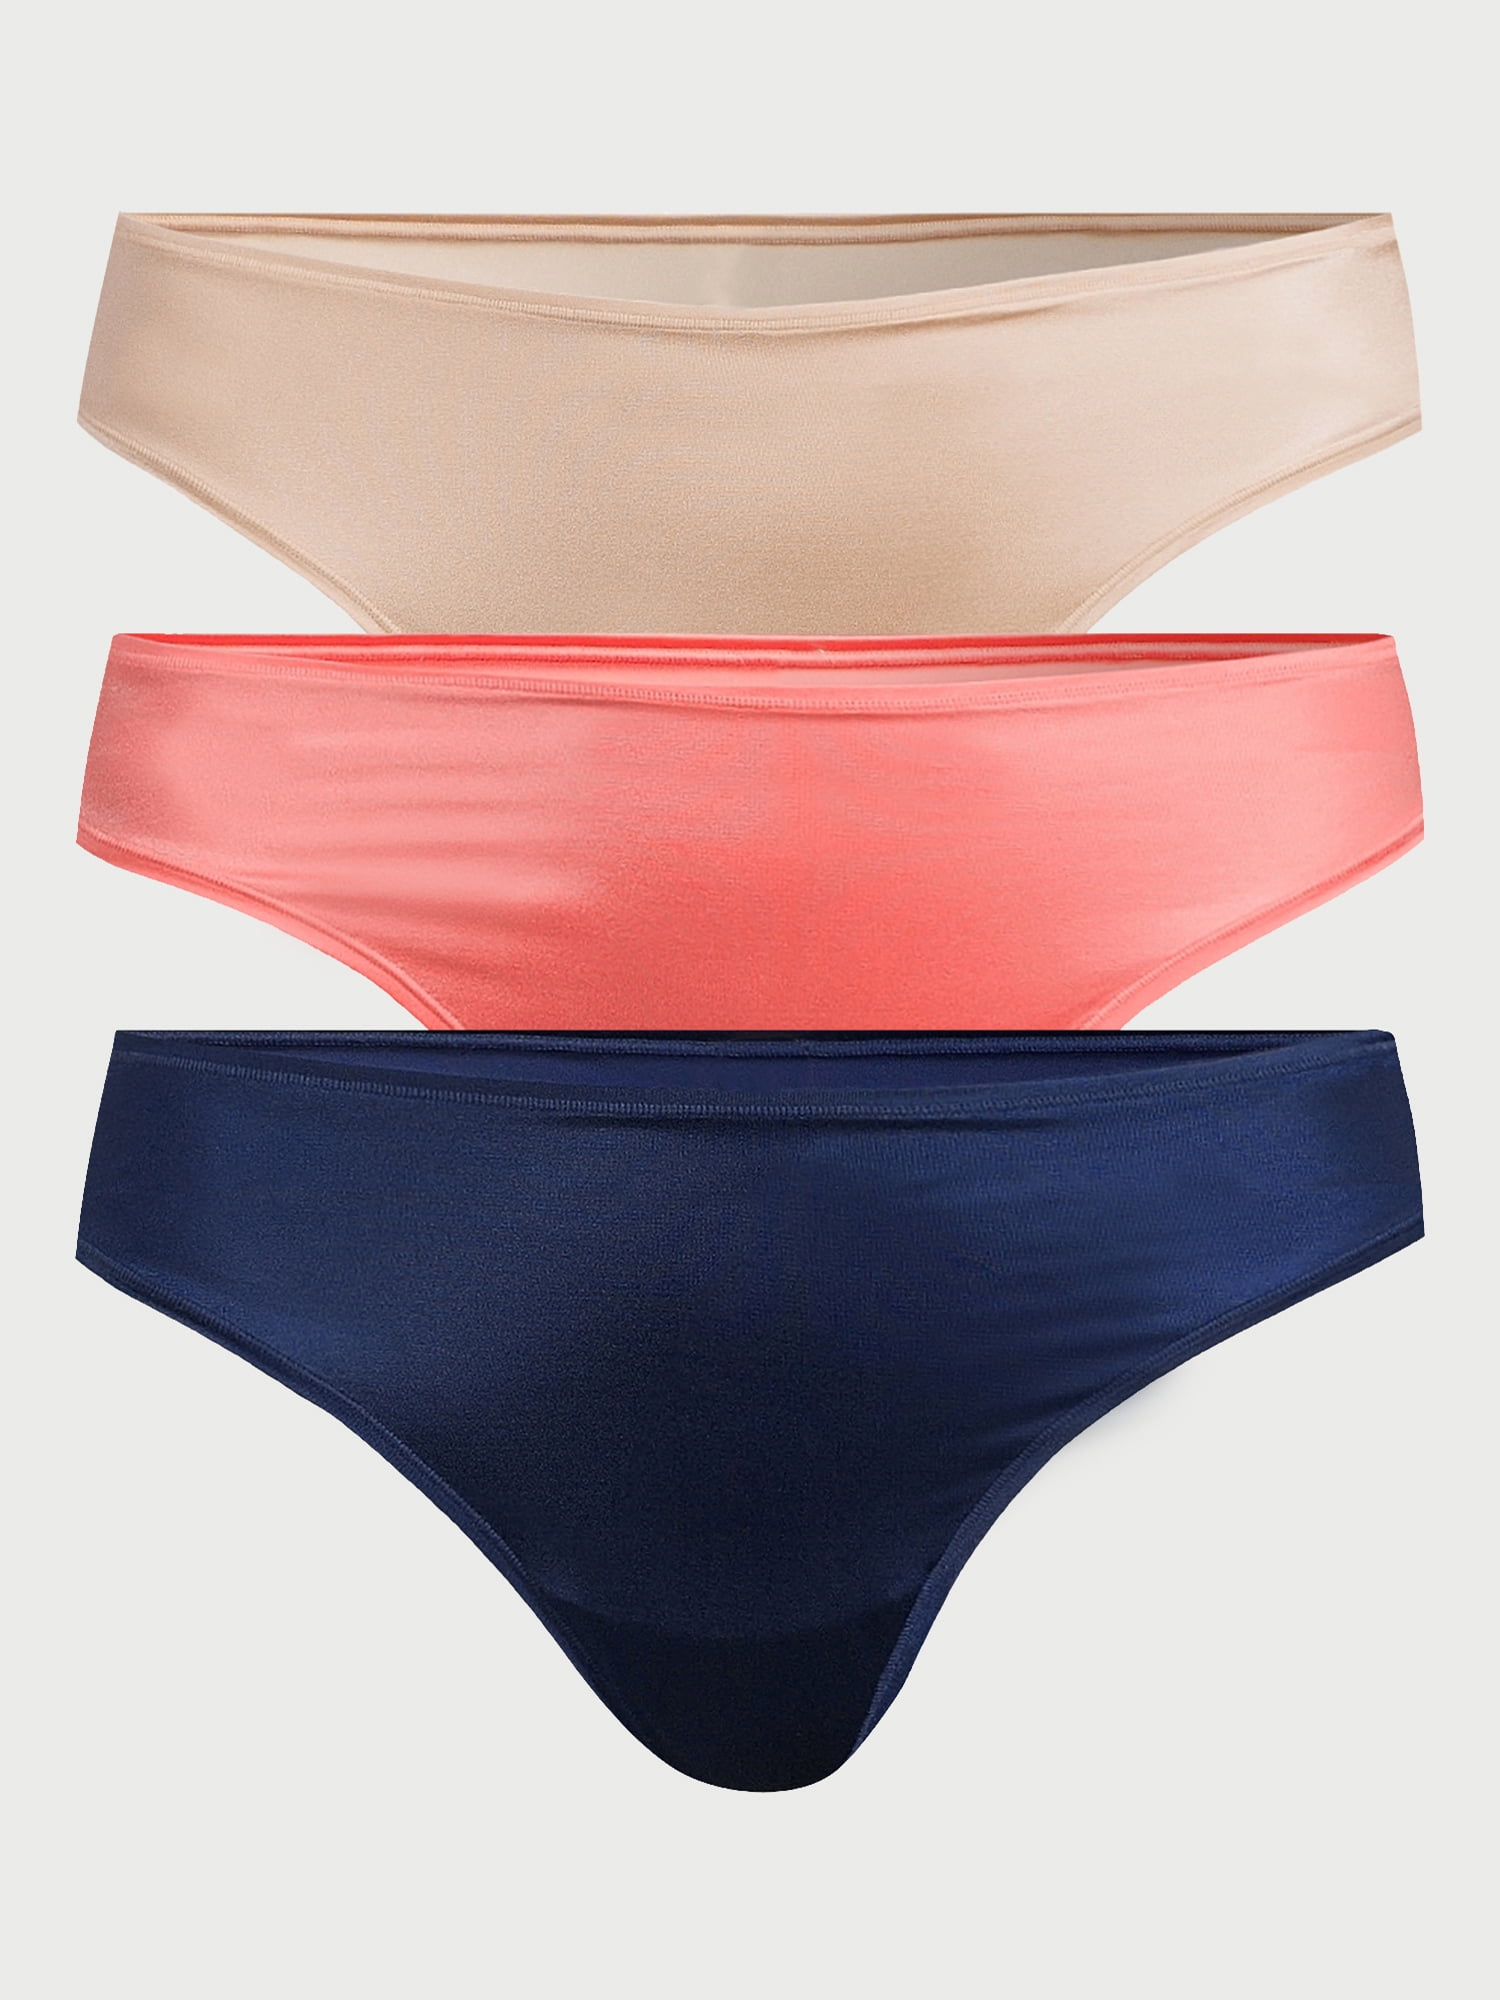 Joyspun Women's Glossy Shine Thong Panties, 3-Pack, Sizes XS to 3XL